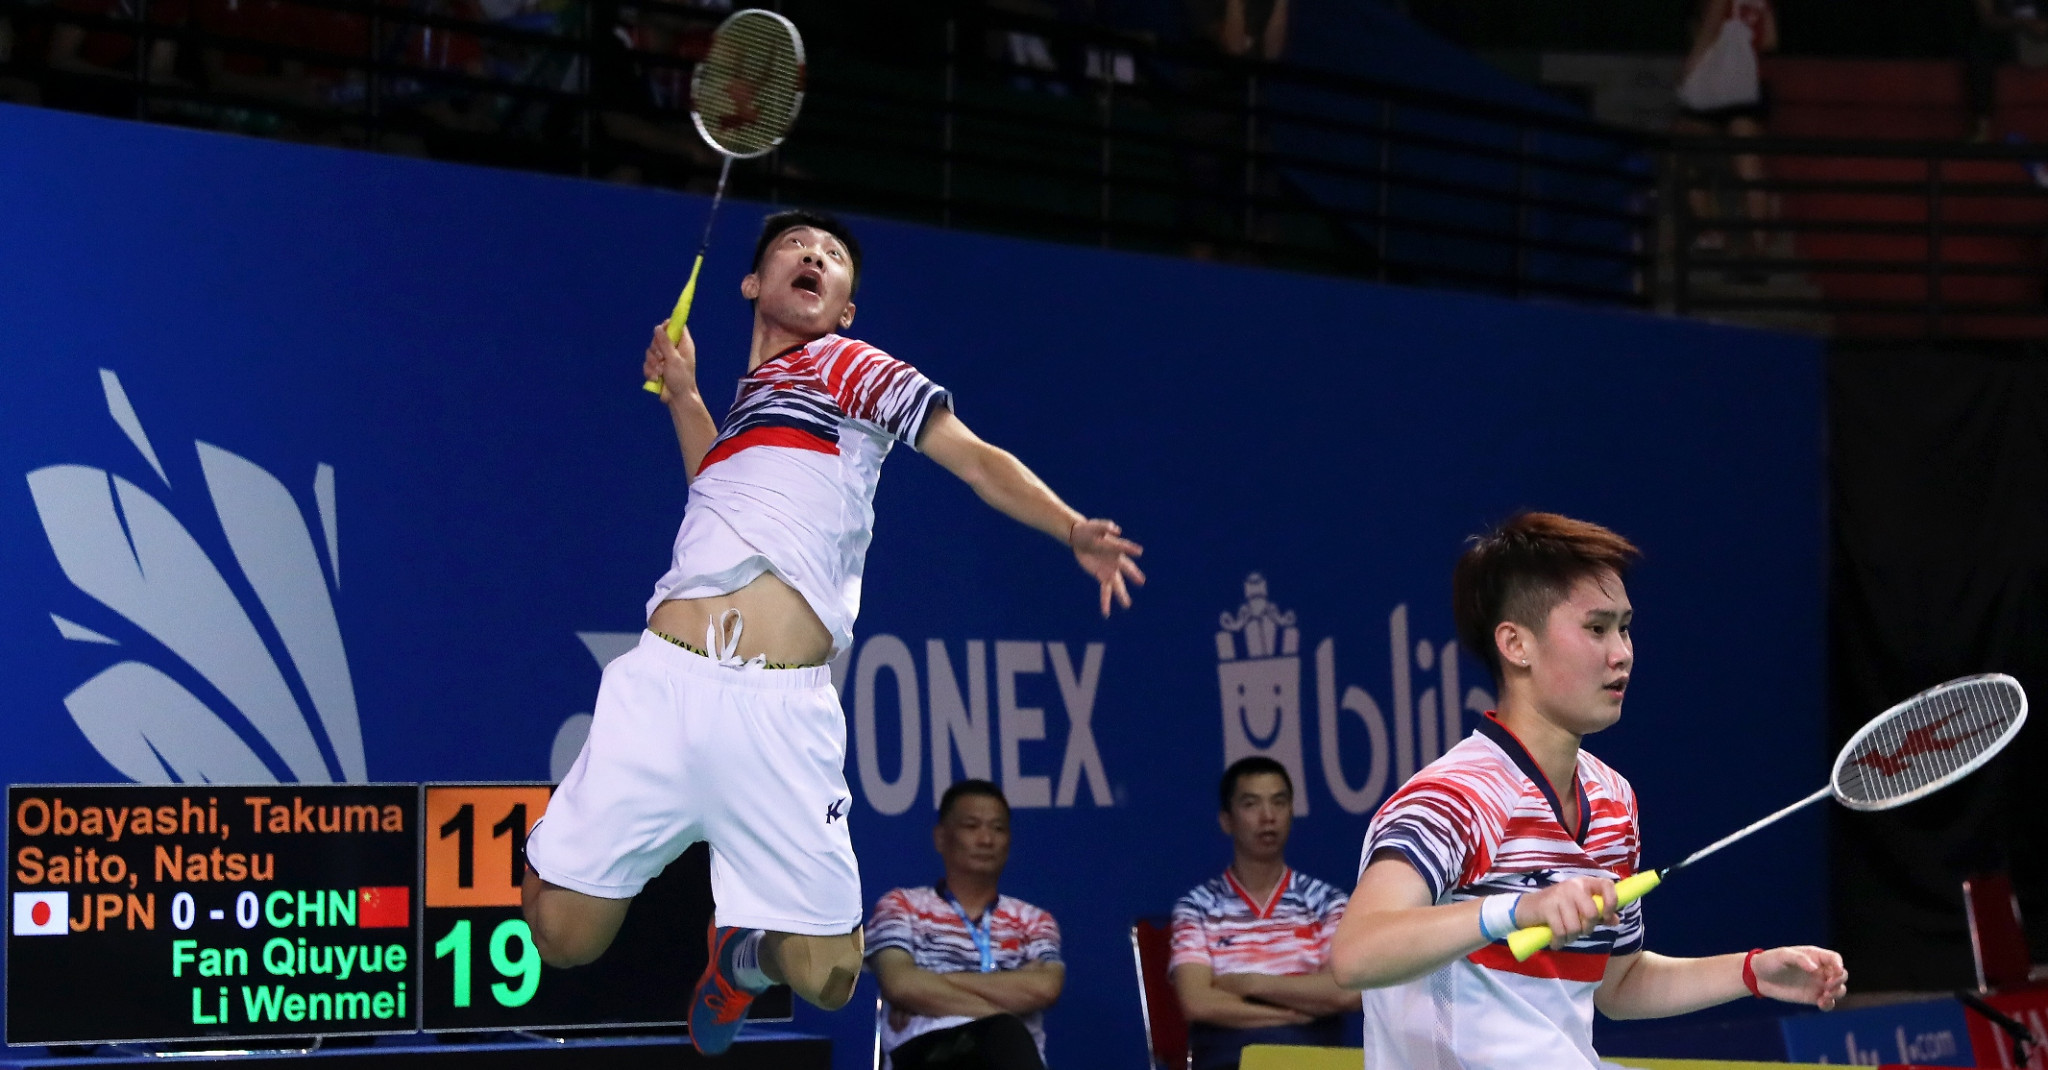 Fan Qiuyue and Li Wenmei won as China progressed to the final ©BWF